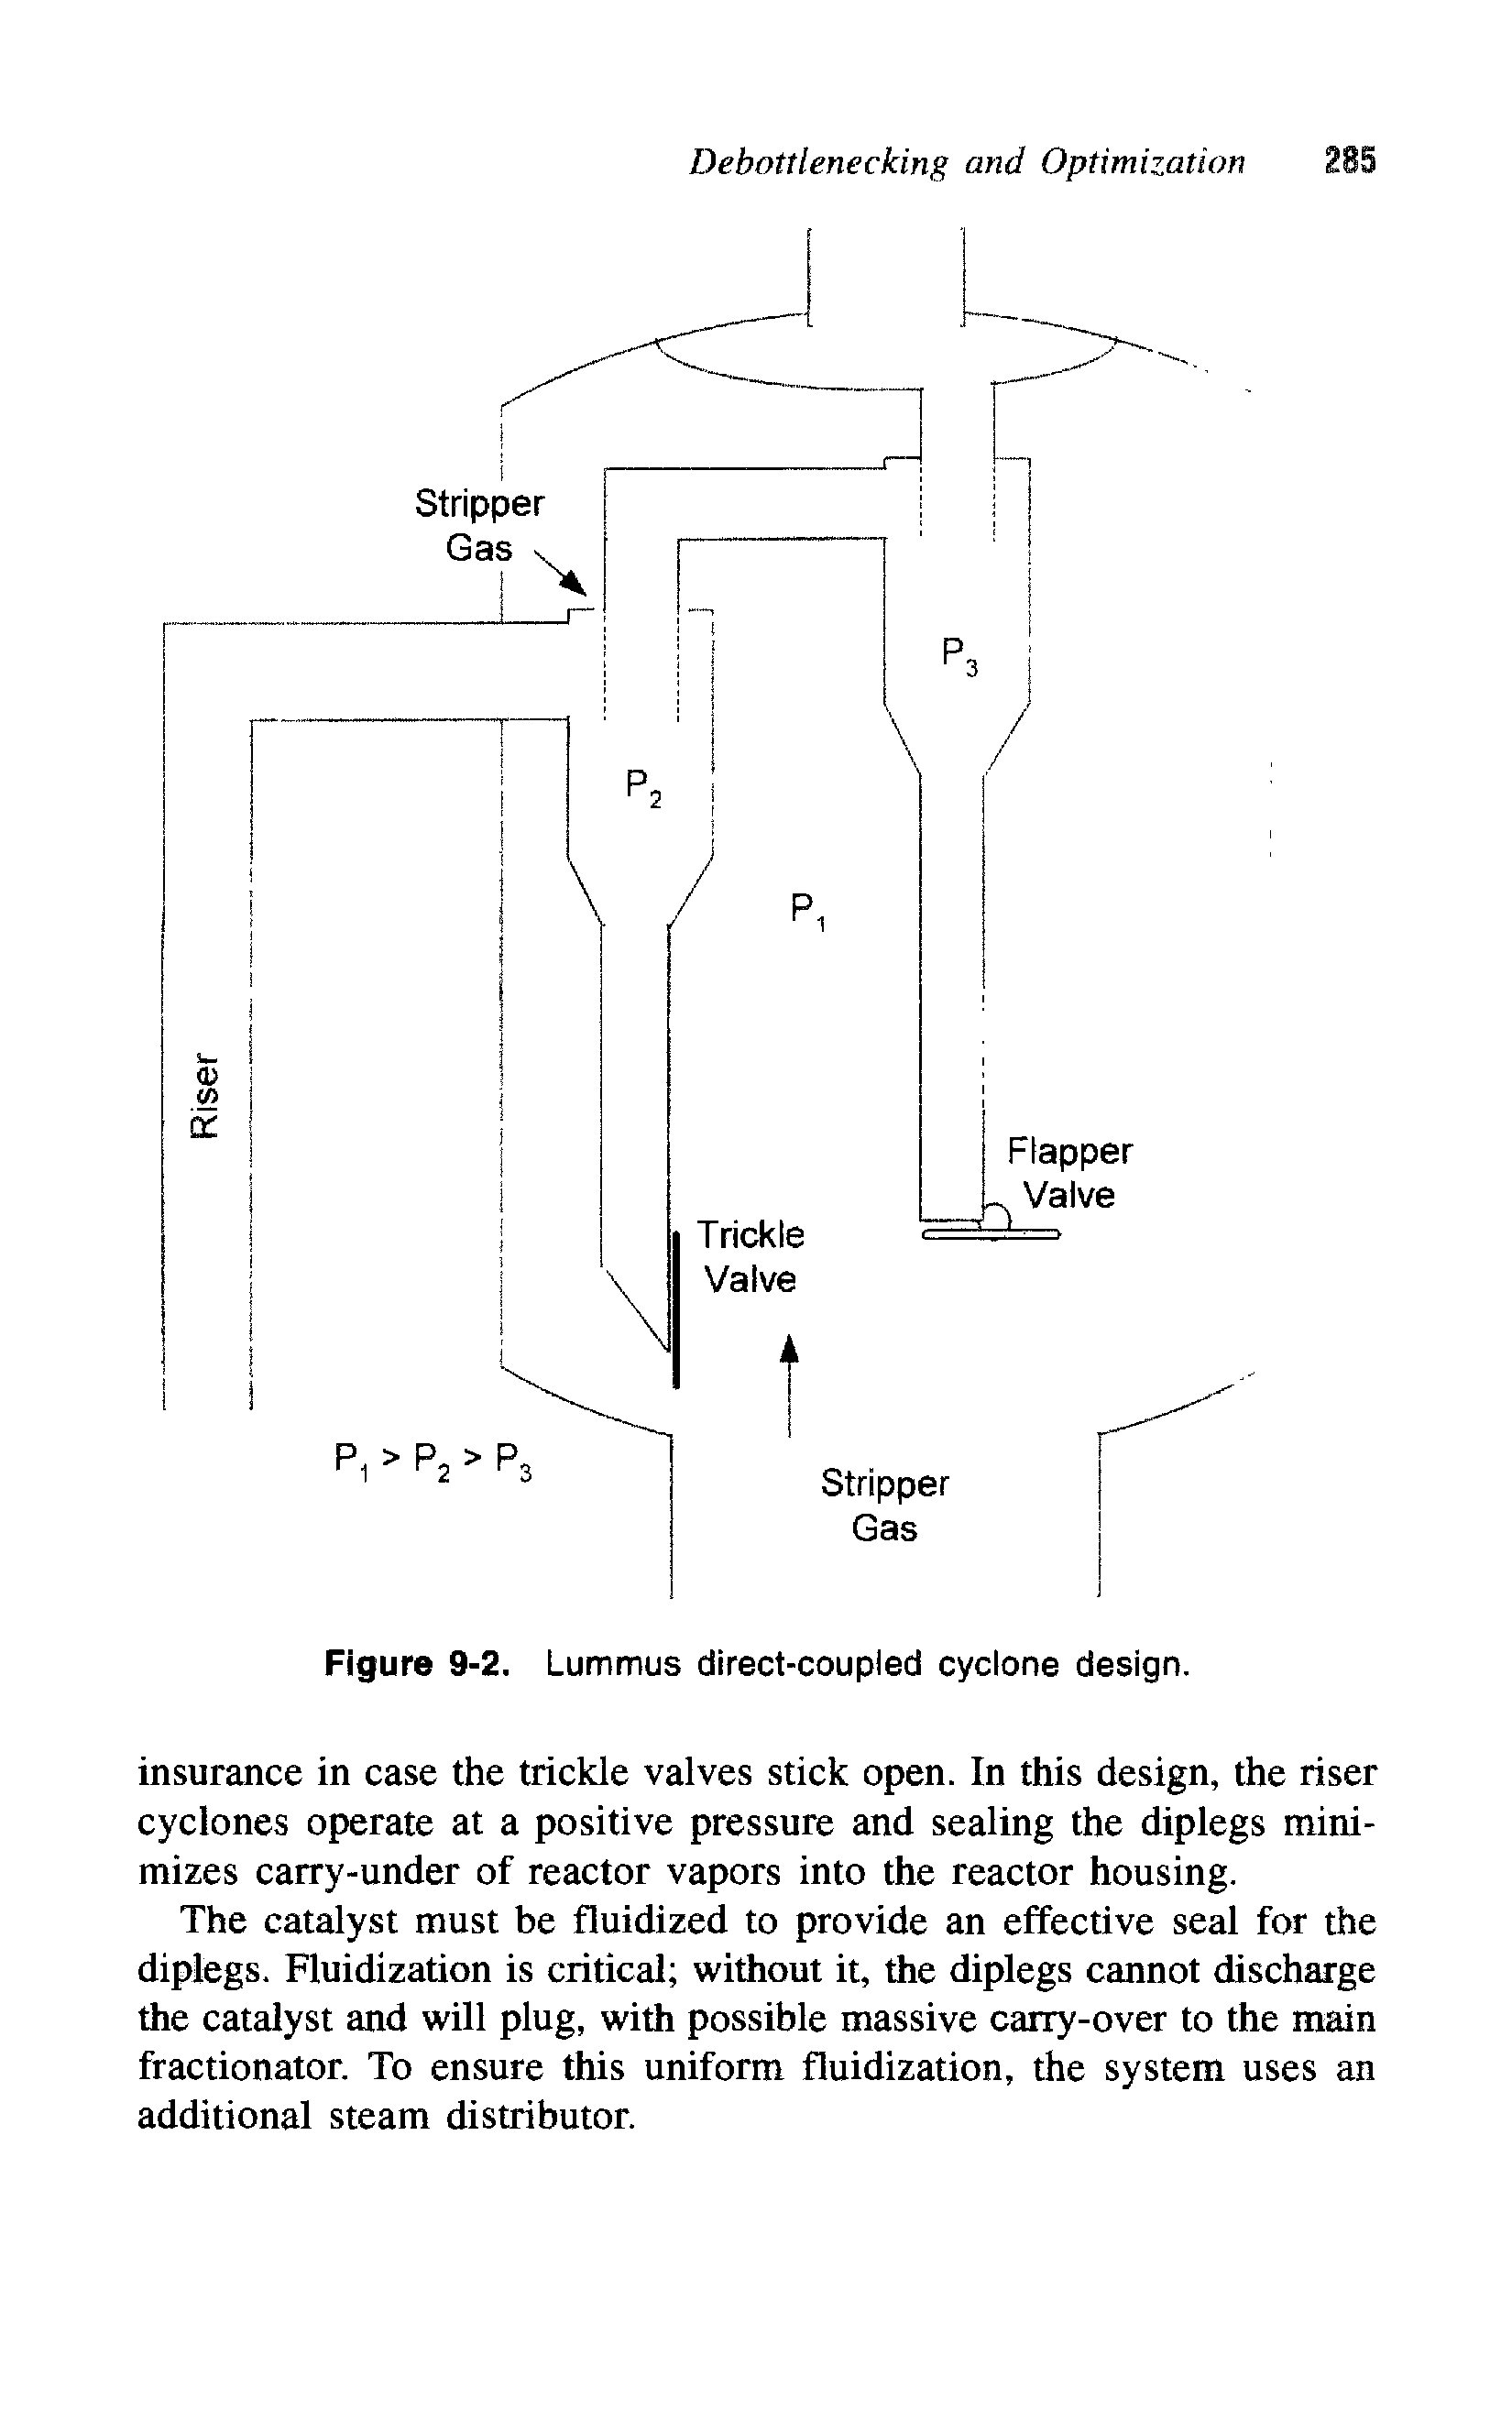 Figure 9-2. Lummus direct-coupled cyclone design.